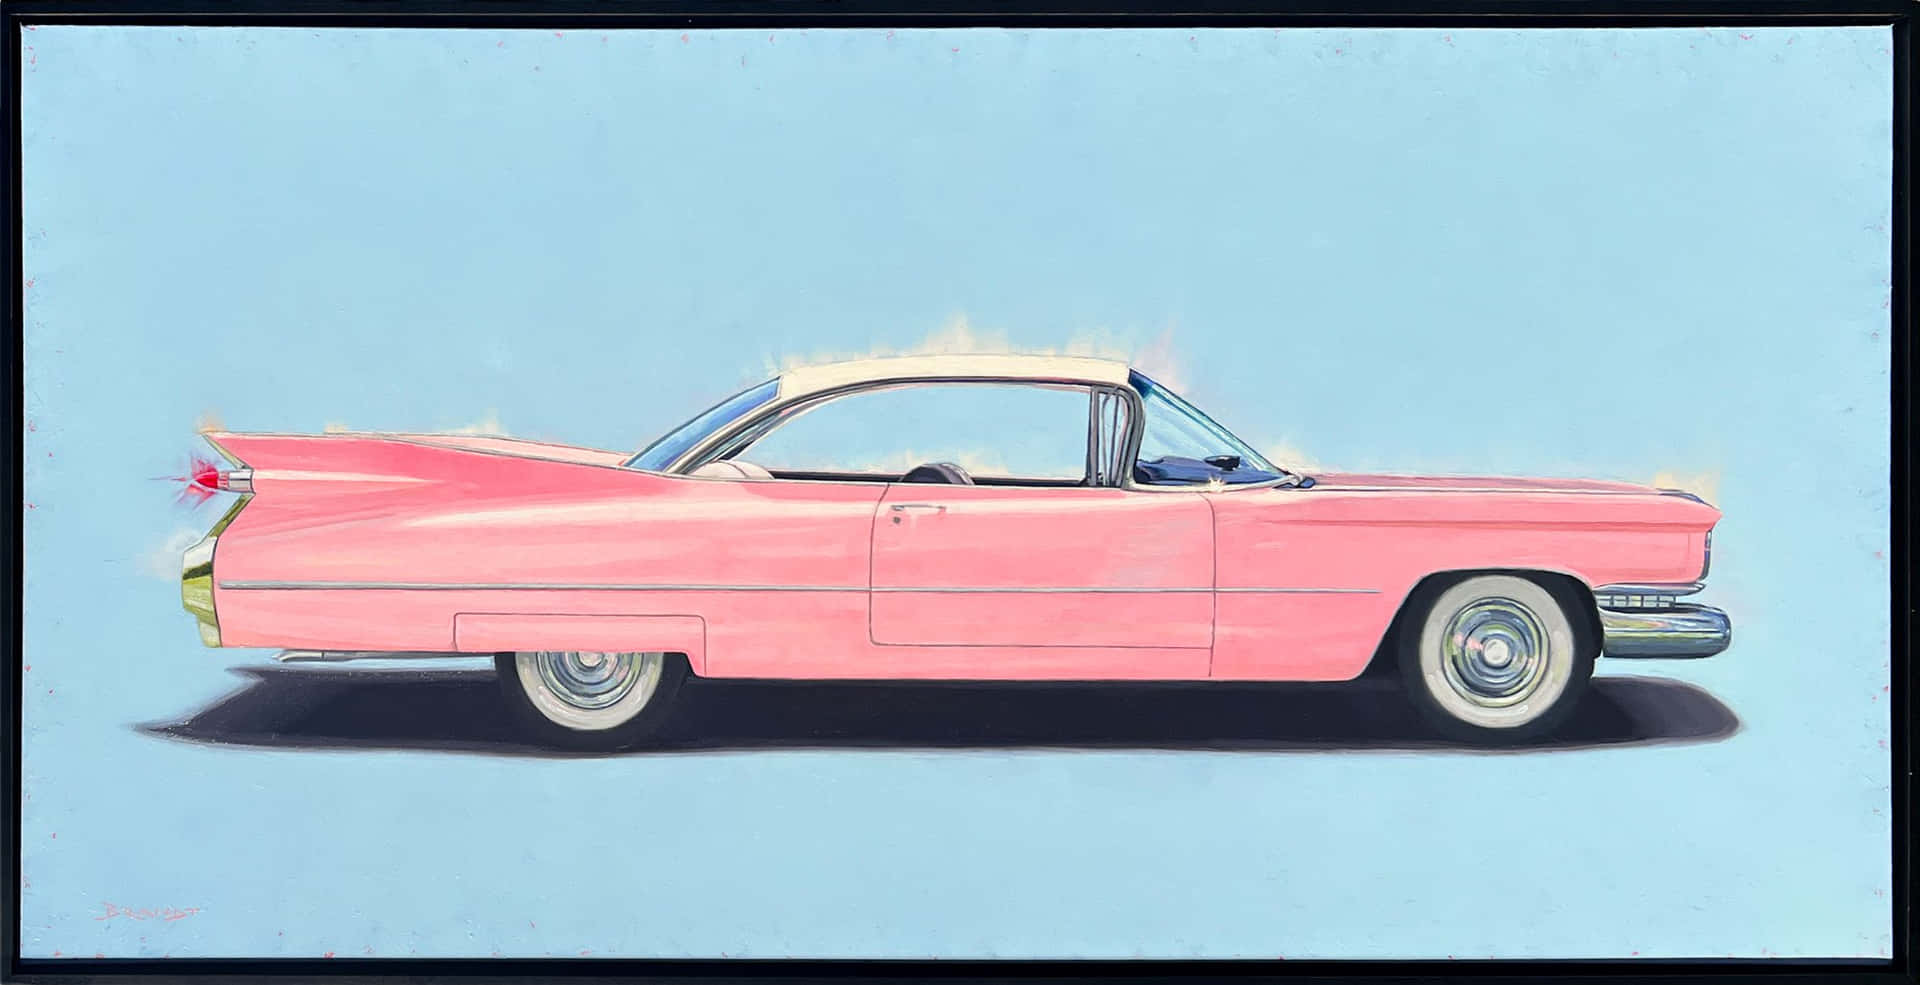 Caption: Vintage Pink Cadillac Glamour Wallpaper